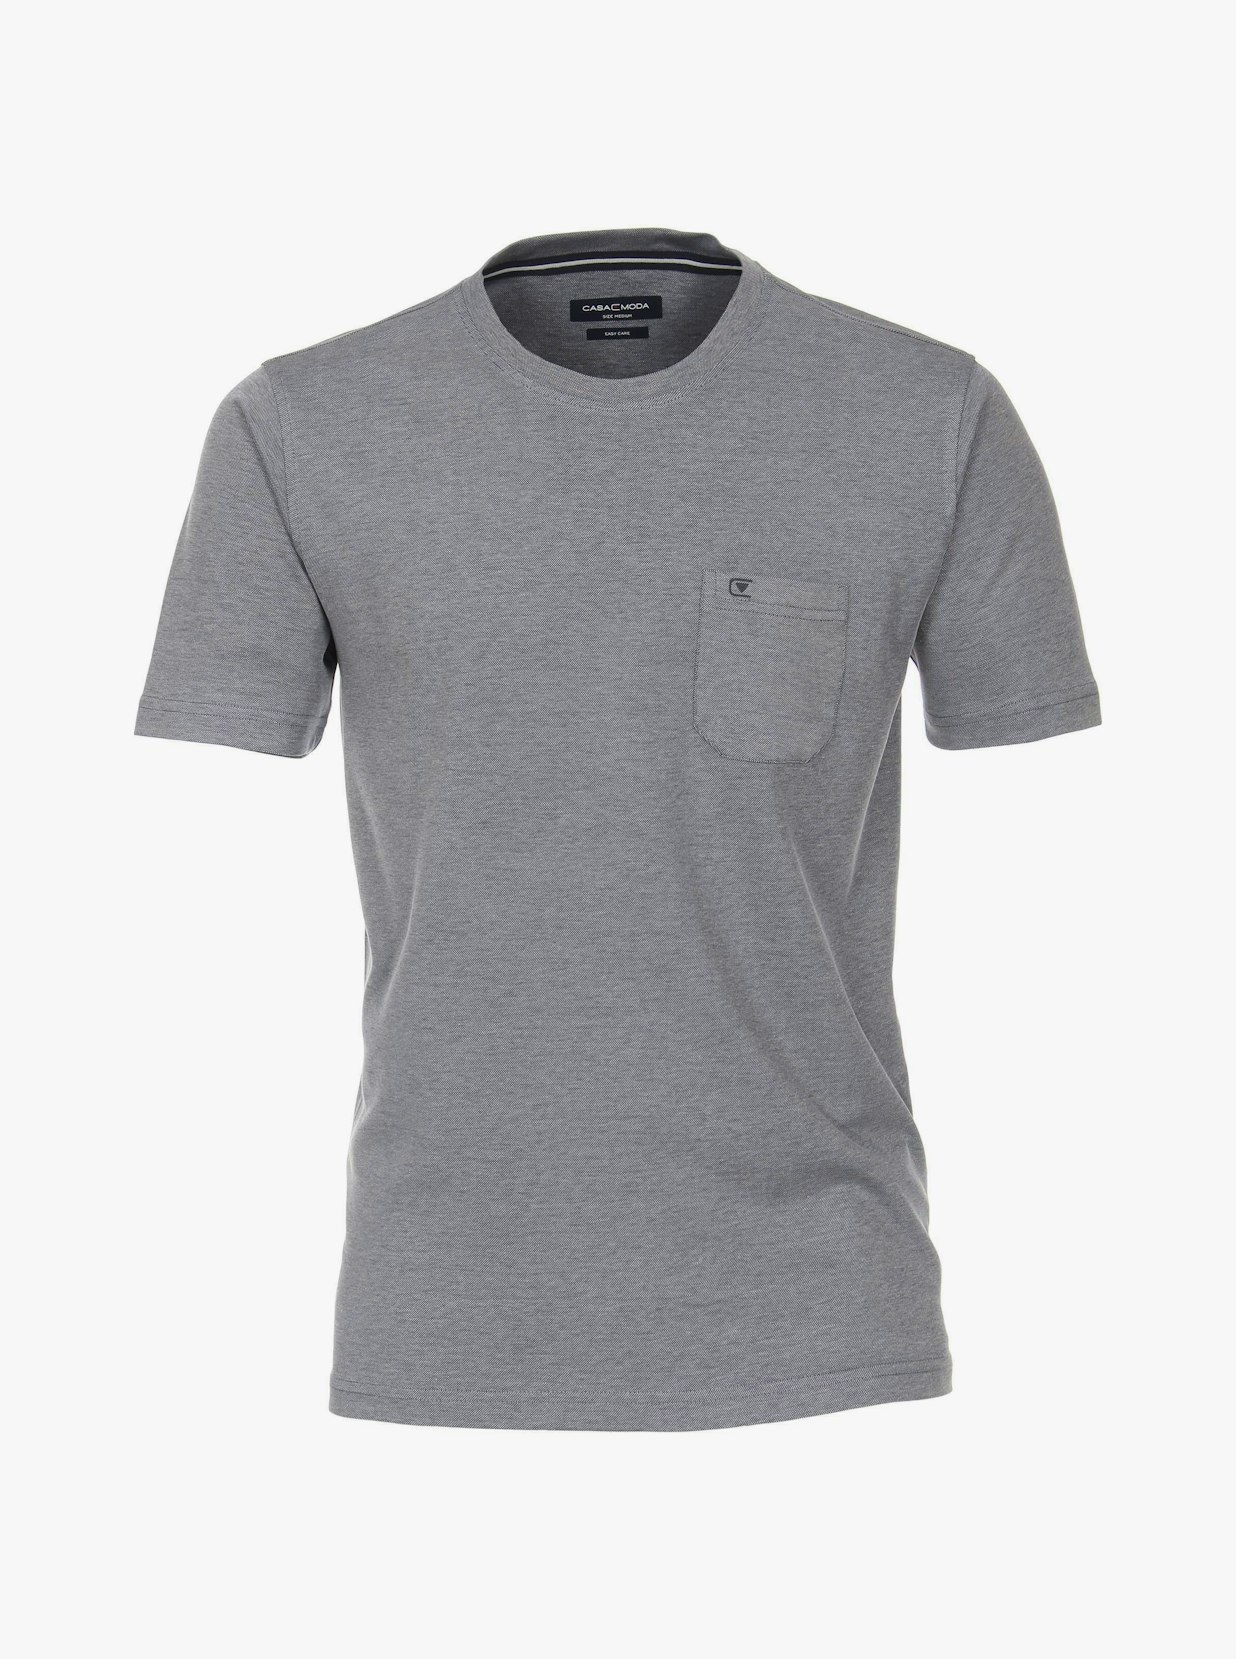 T-Shirt in graues Mittelblau - CASAMODA